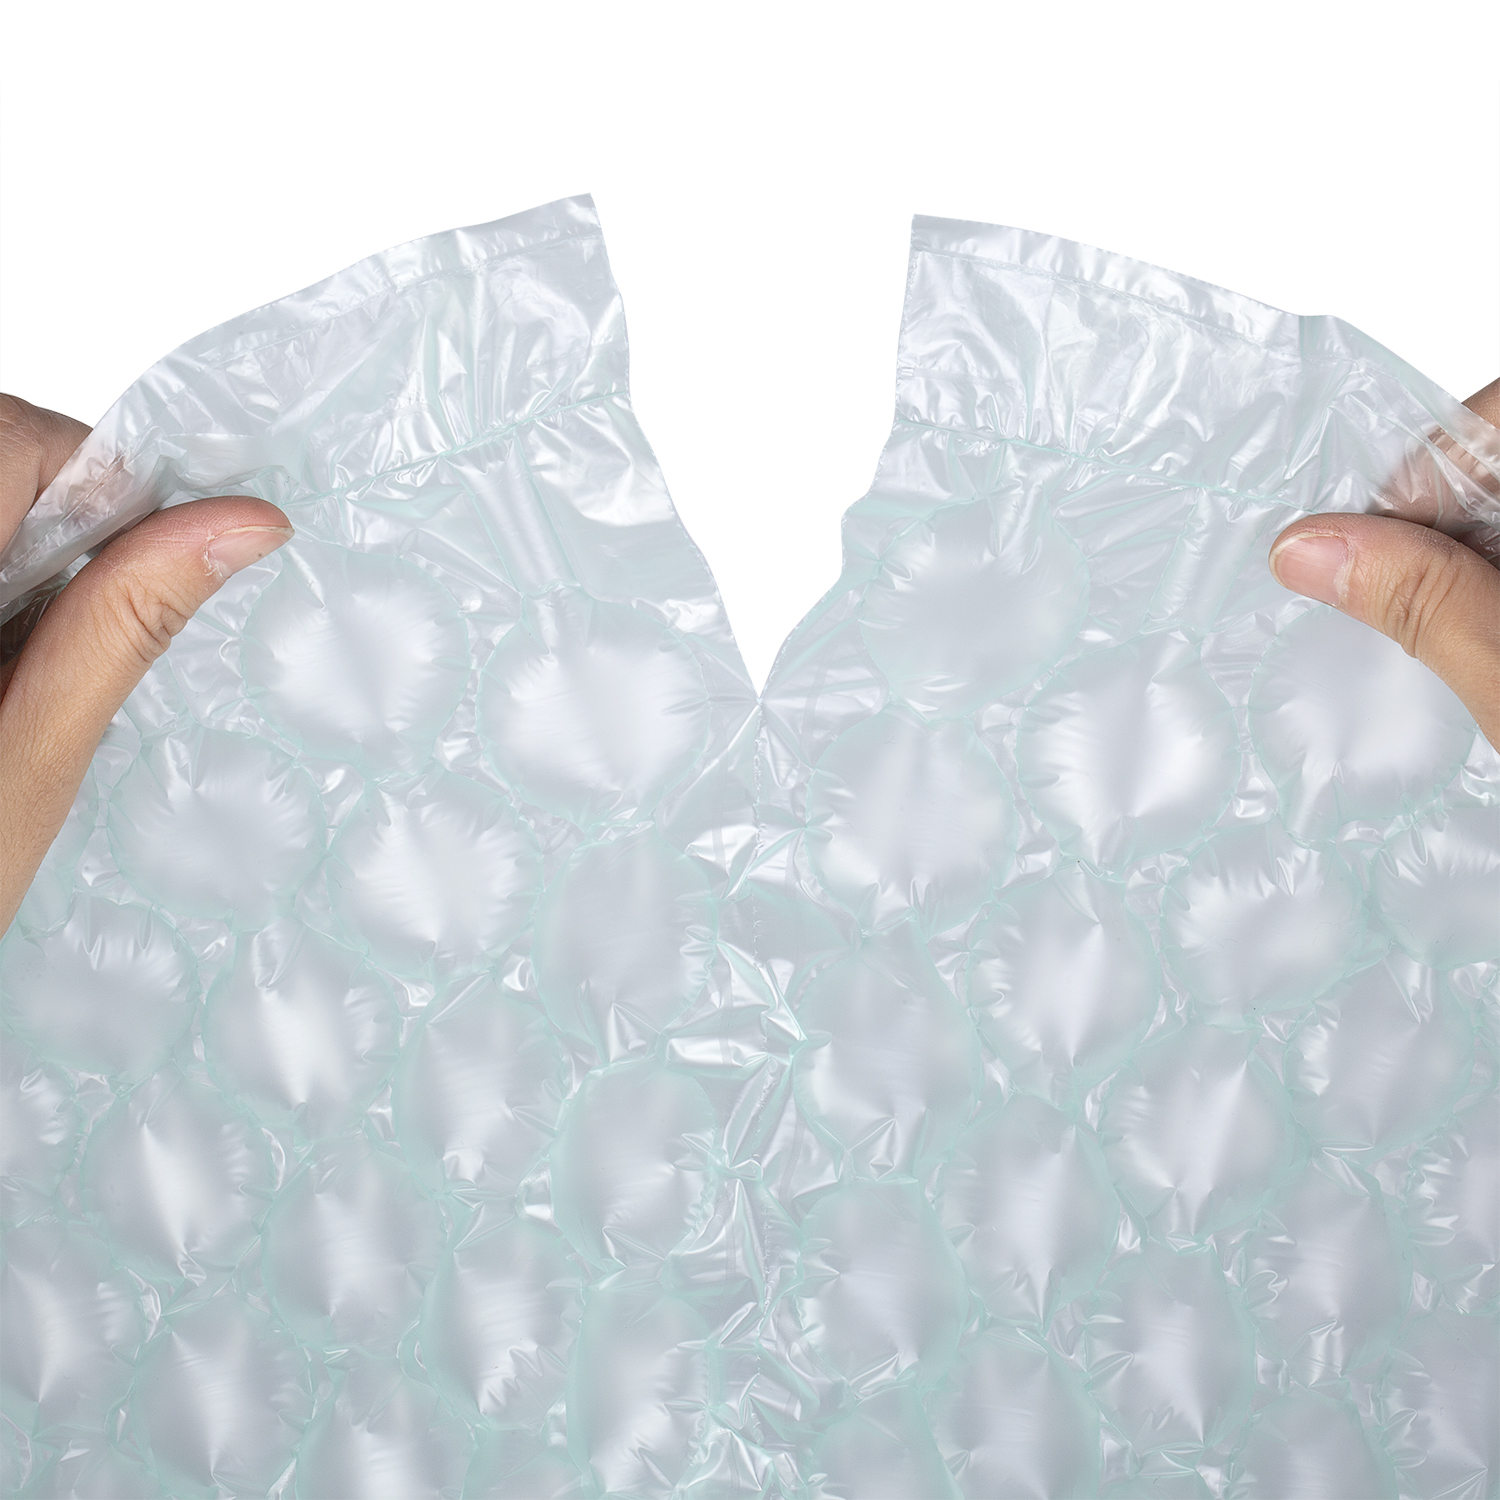 Transparent Moisture Proof Air Cushion Bag For Food